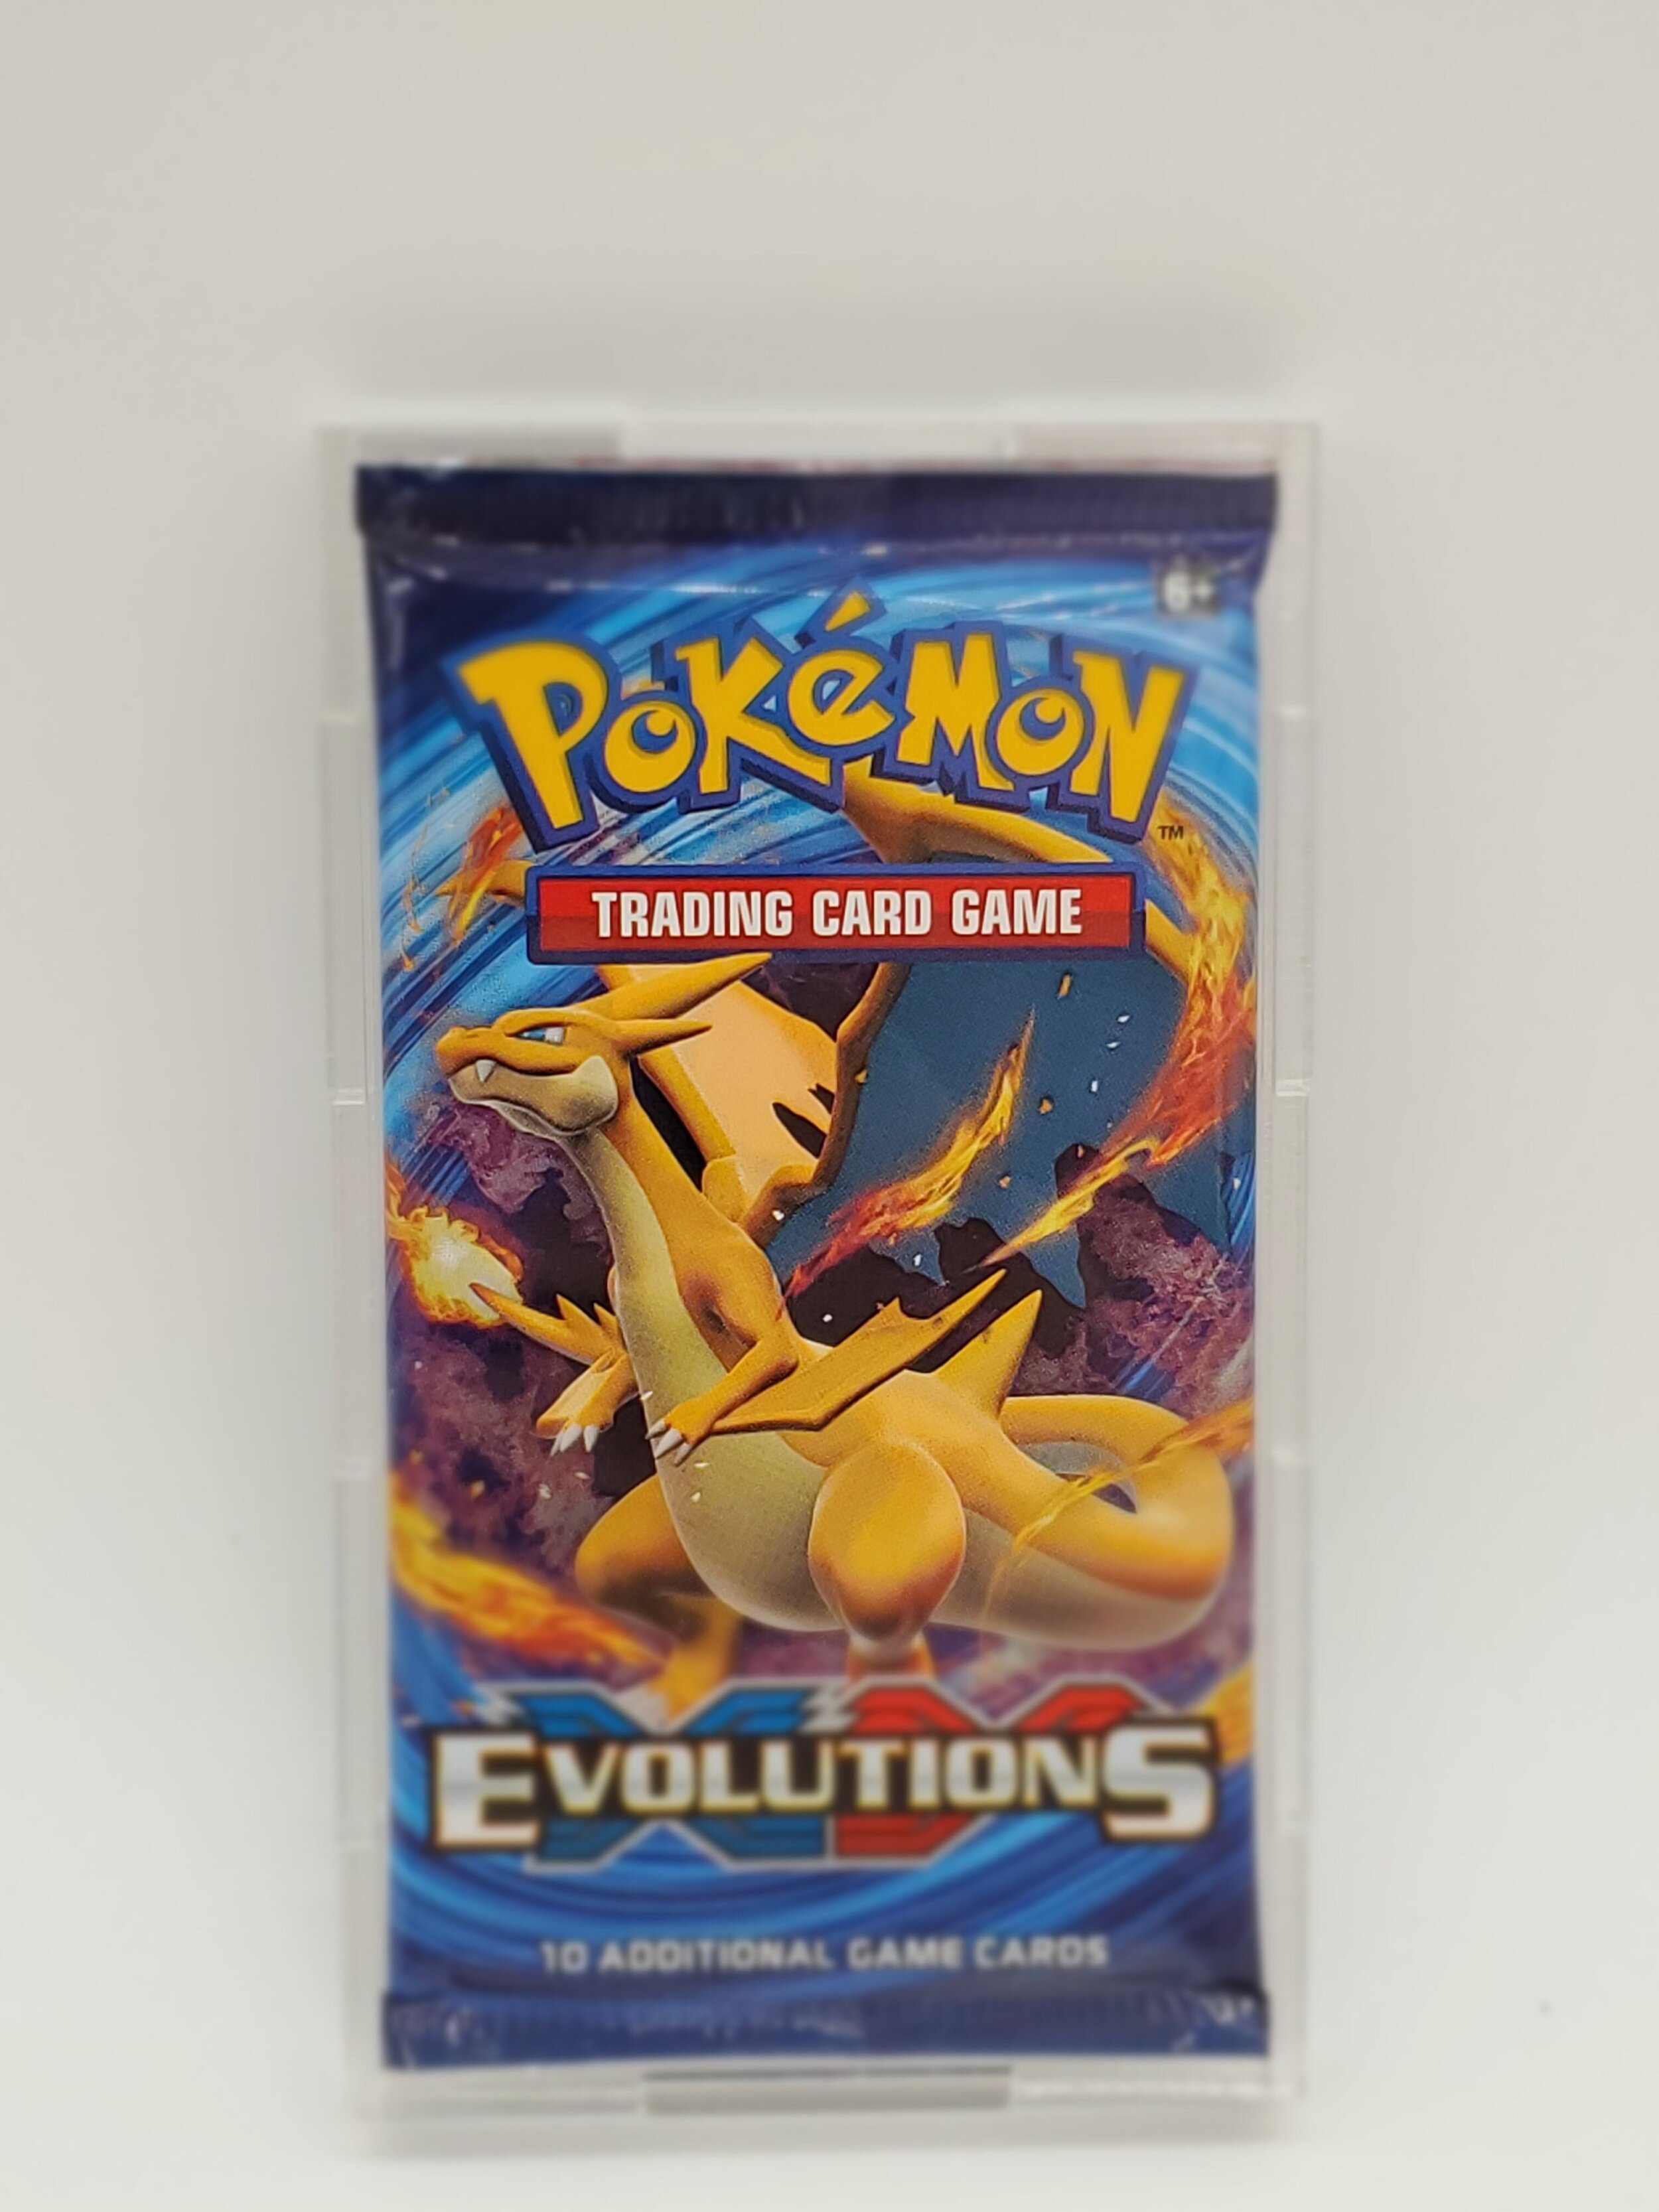 Japanese Pokémon Booster Box Display CaseFraming-grade Acrylic 